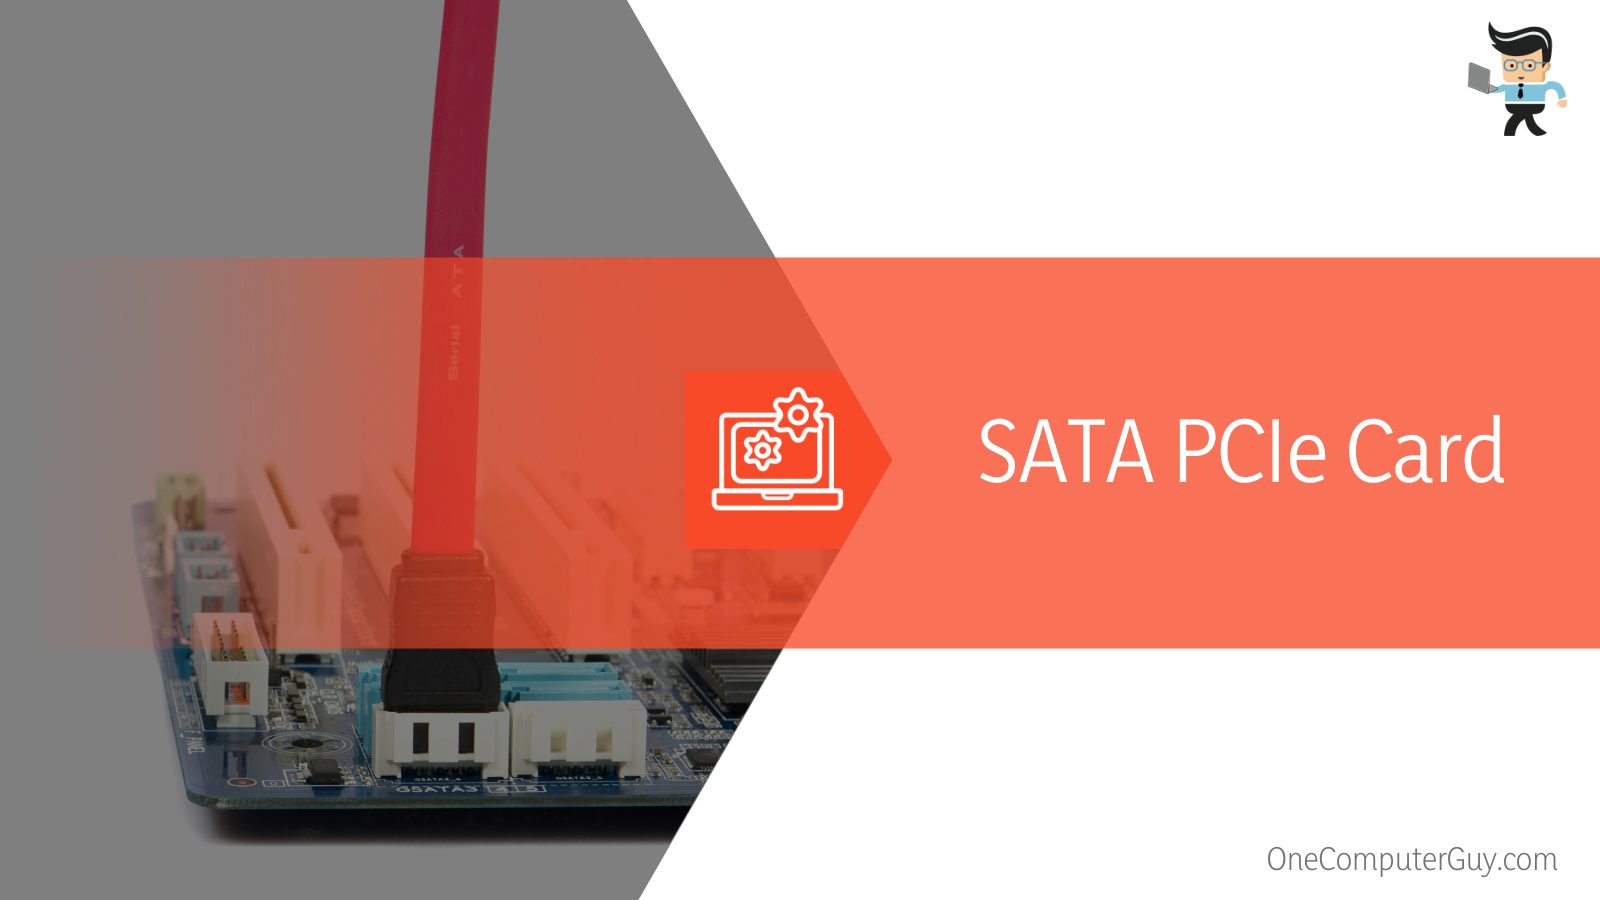 SATA PCIe Card